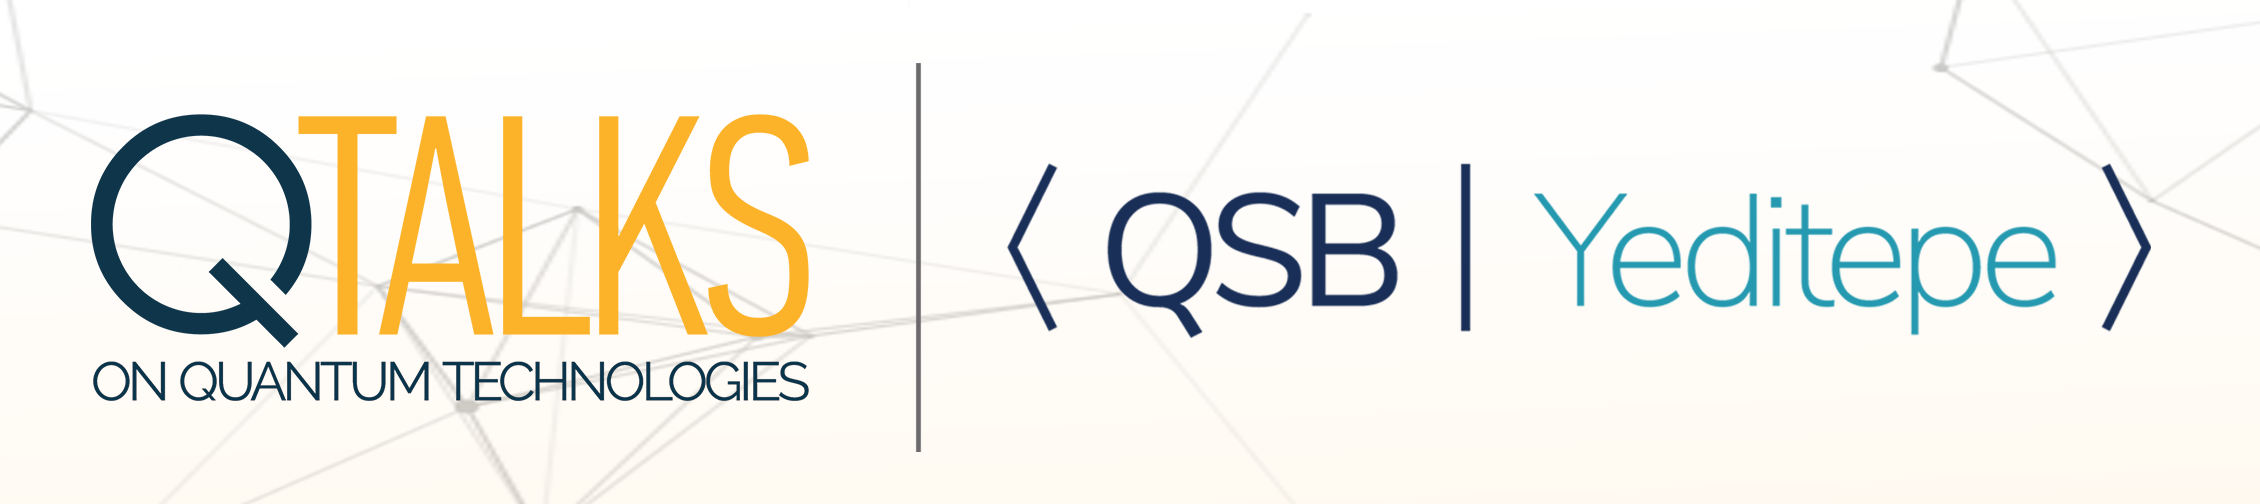 QTalks on Quantum Technologies organized by QSB Teditepe